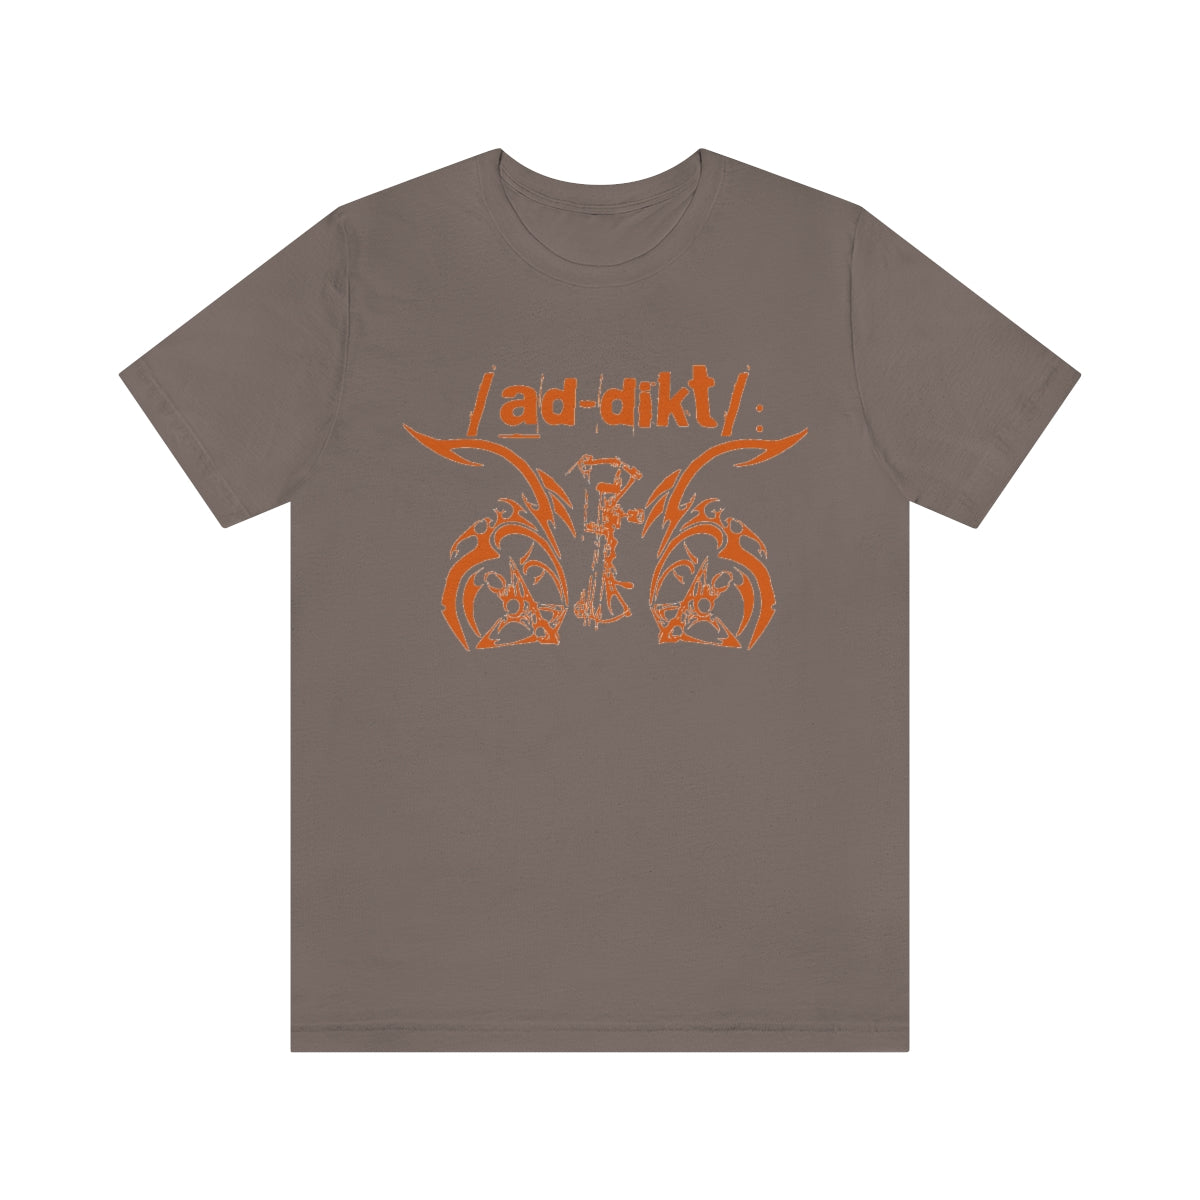 Bow /ad-dikt/: orange Softstyle T-Shirt